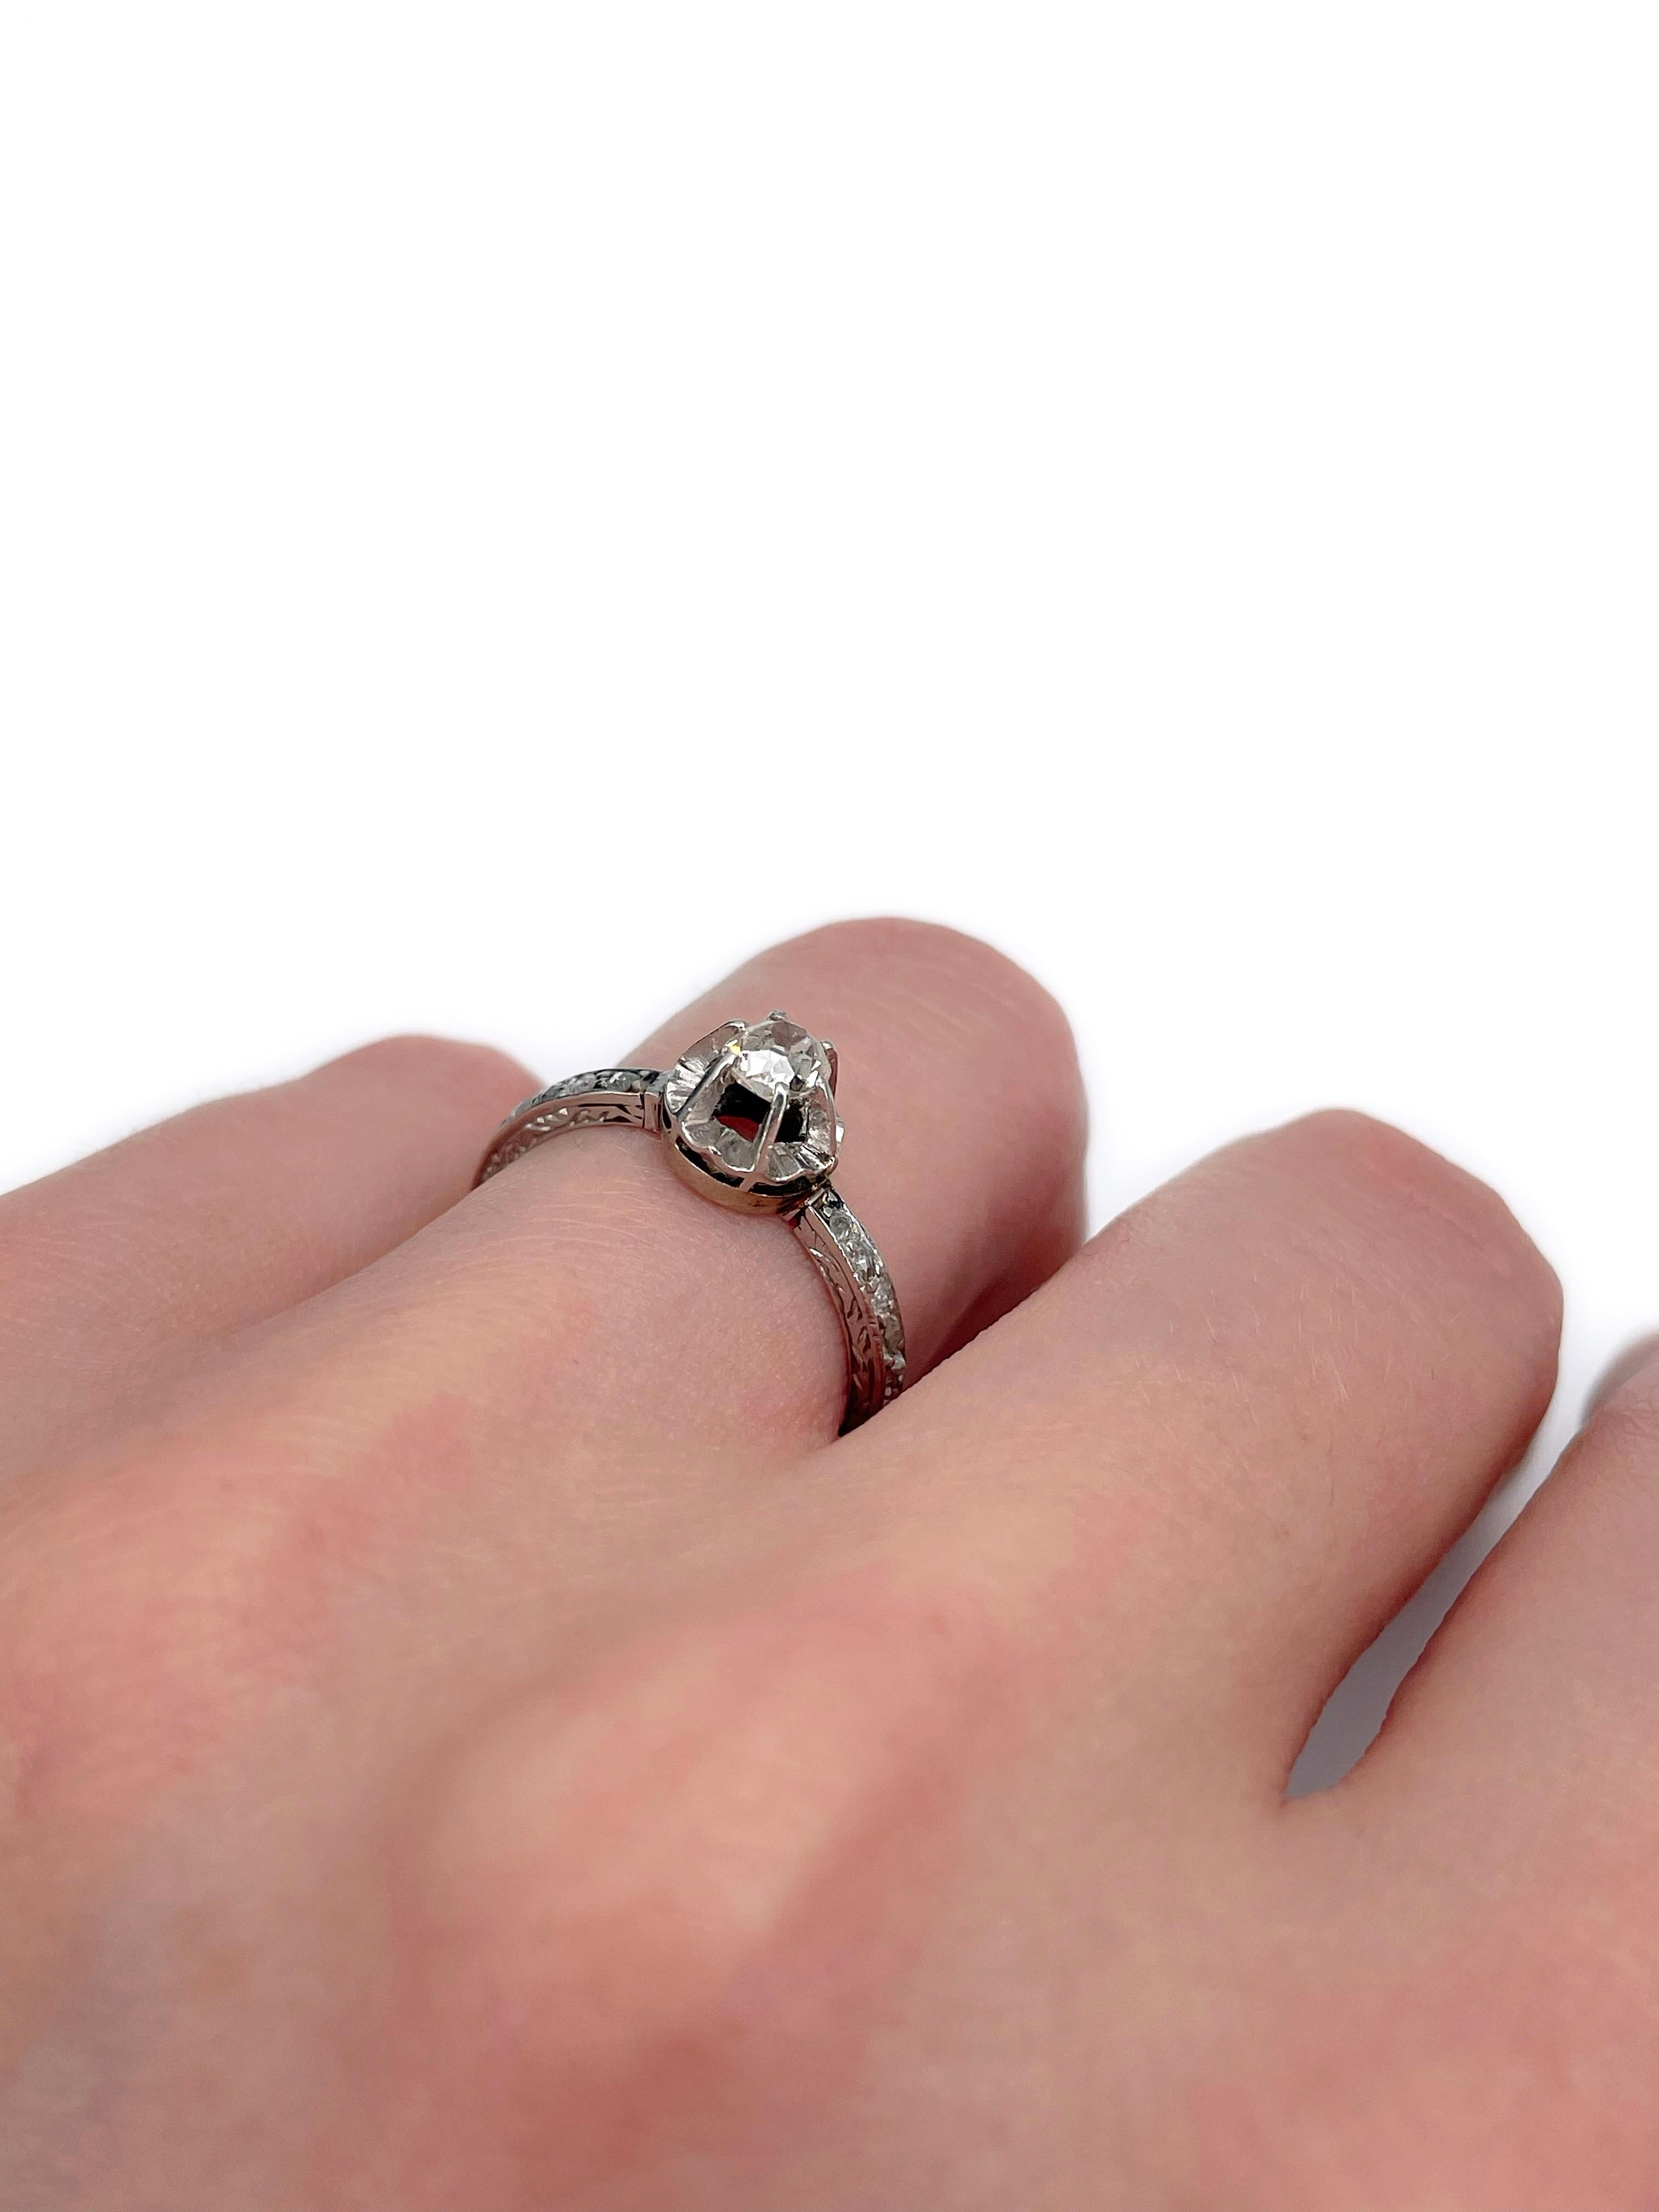 Women's Victorian 900 Platinum 0.50 Carat Old Cut Diamond Engagement Ring For Sale